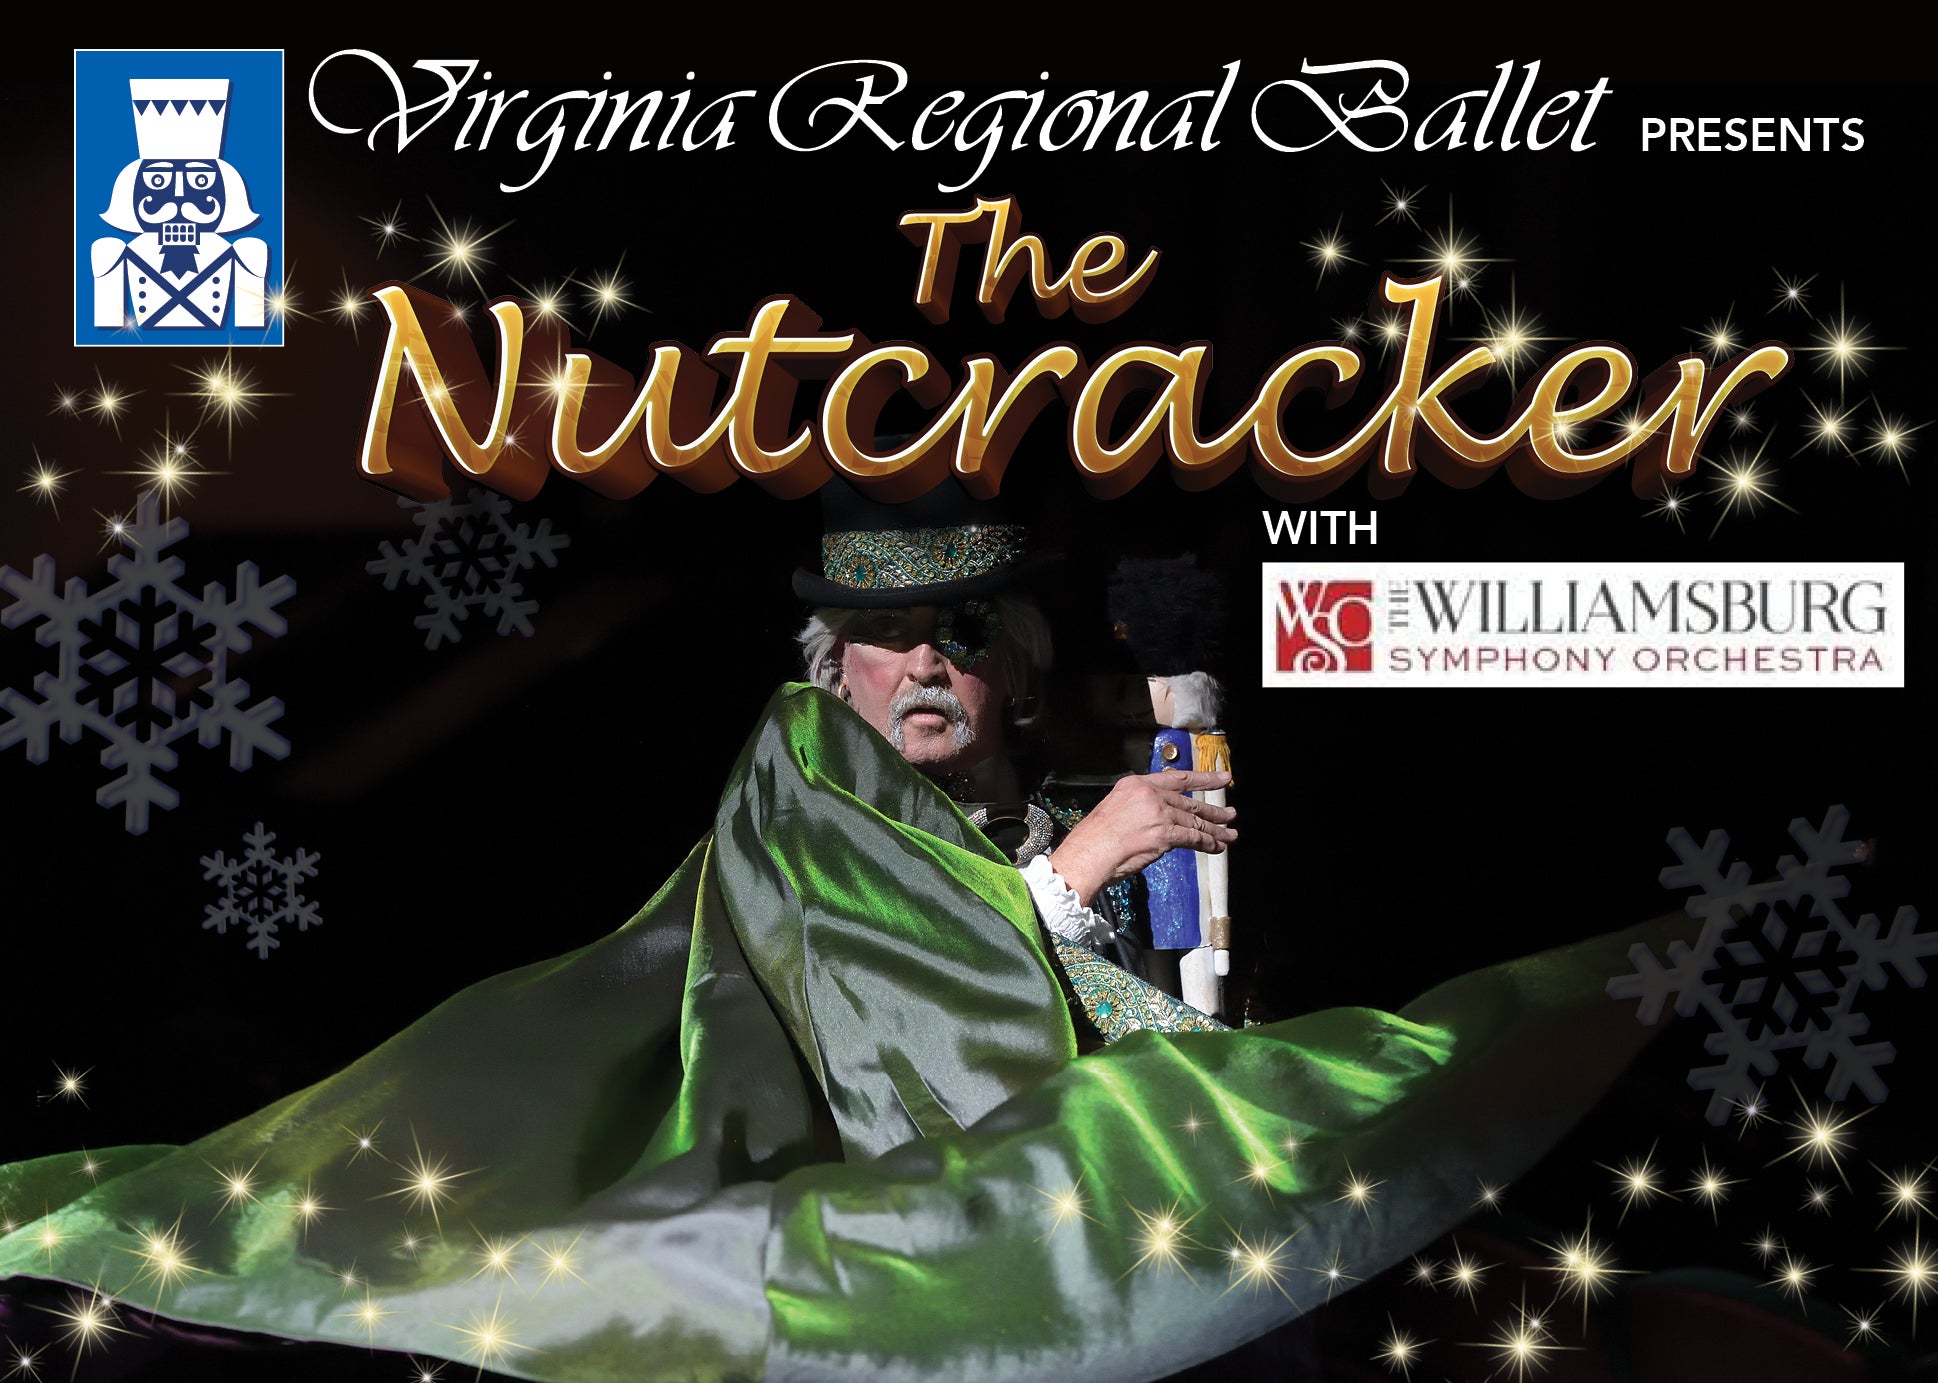 Virginia Regional Ballet Presents "The Nutcracker"